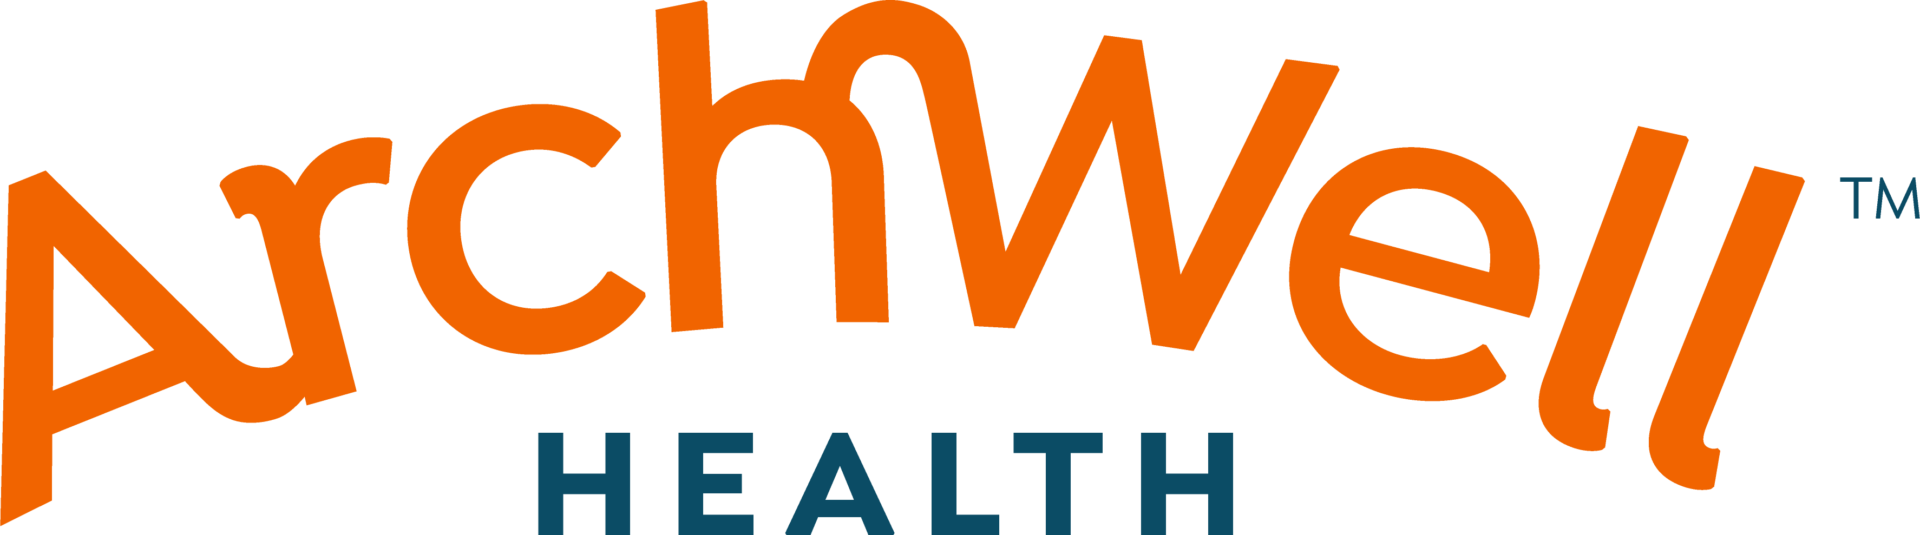 Orange and blue text logo